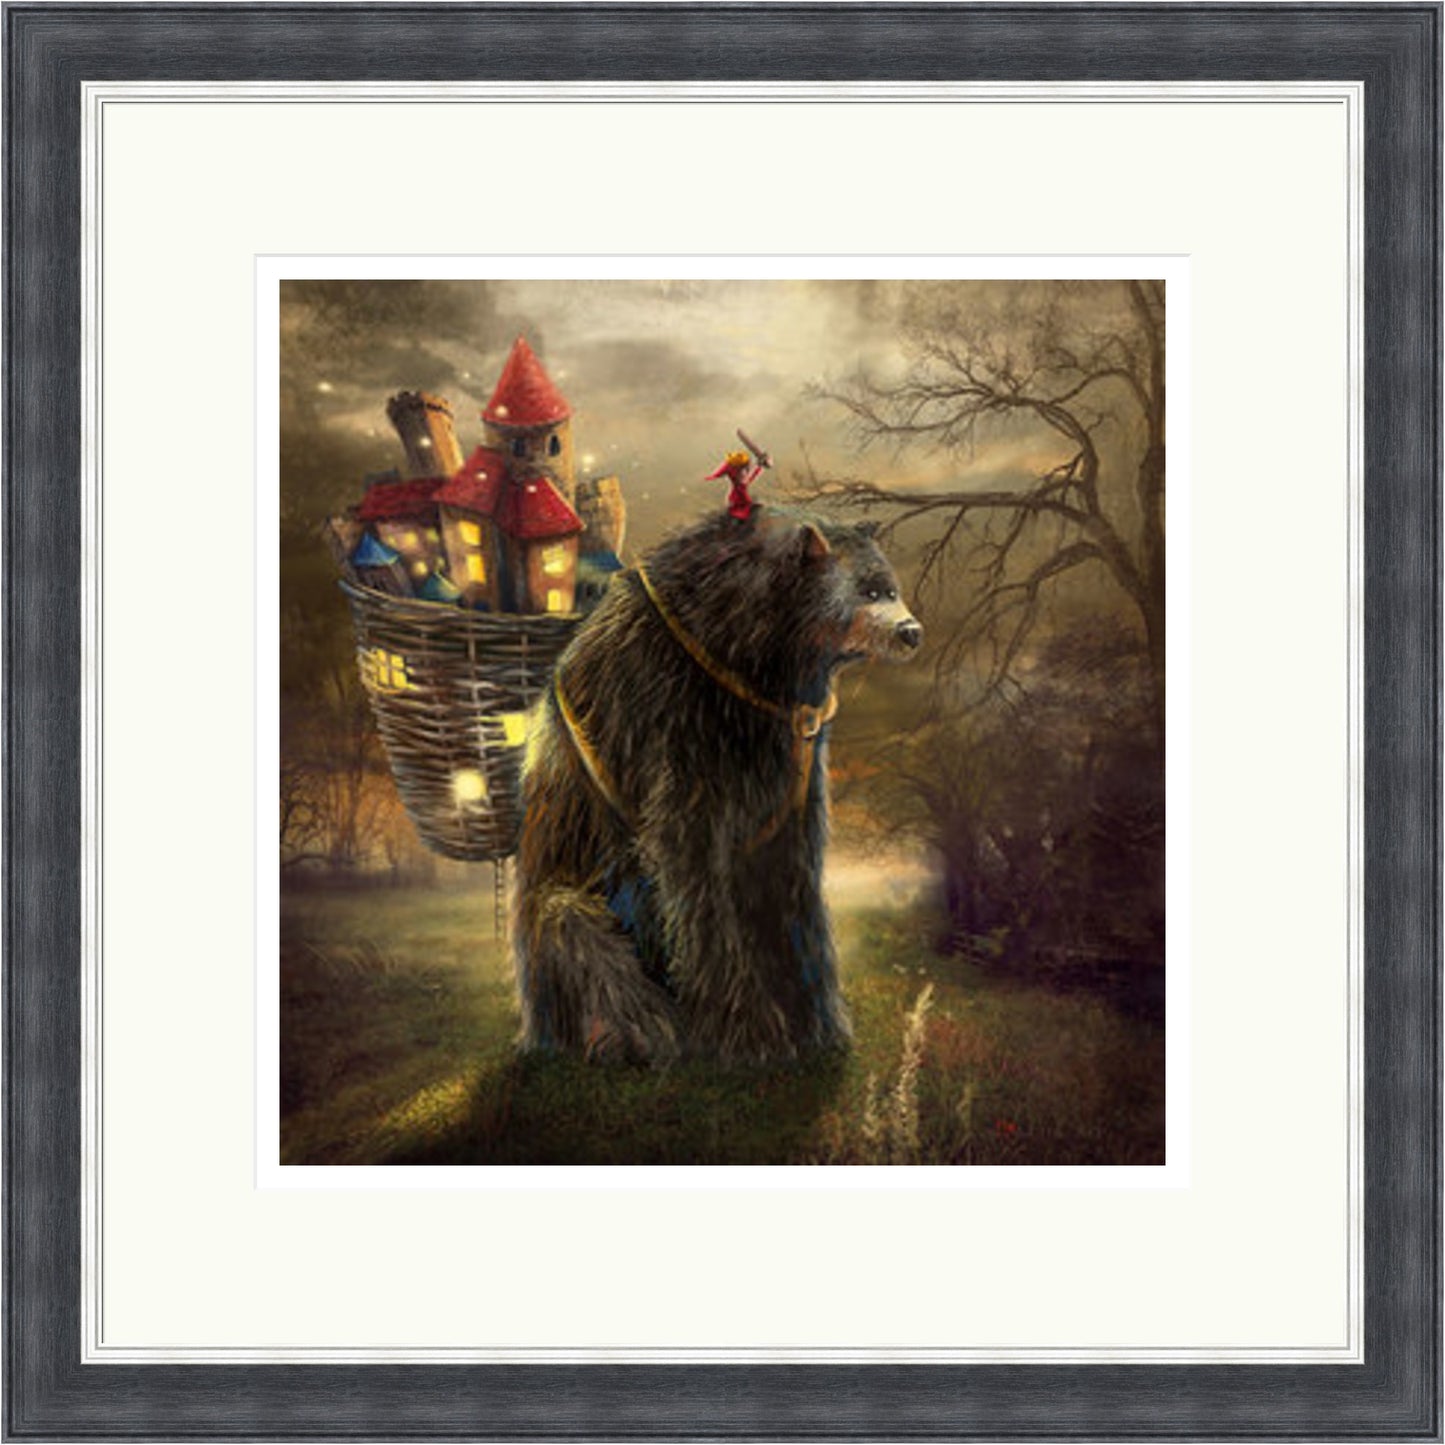 A Bear who carried a Kingdom by Matylda Konecka